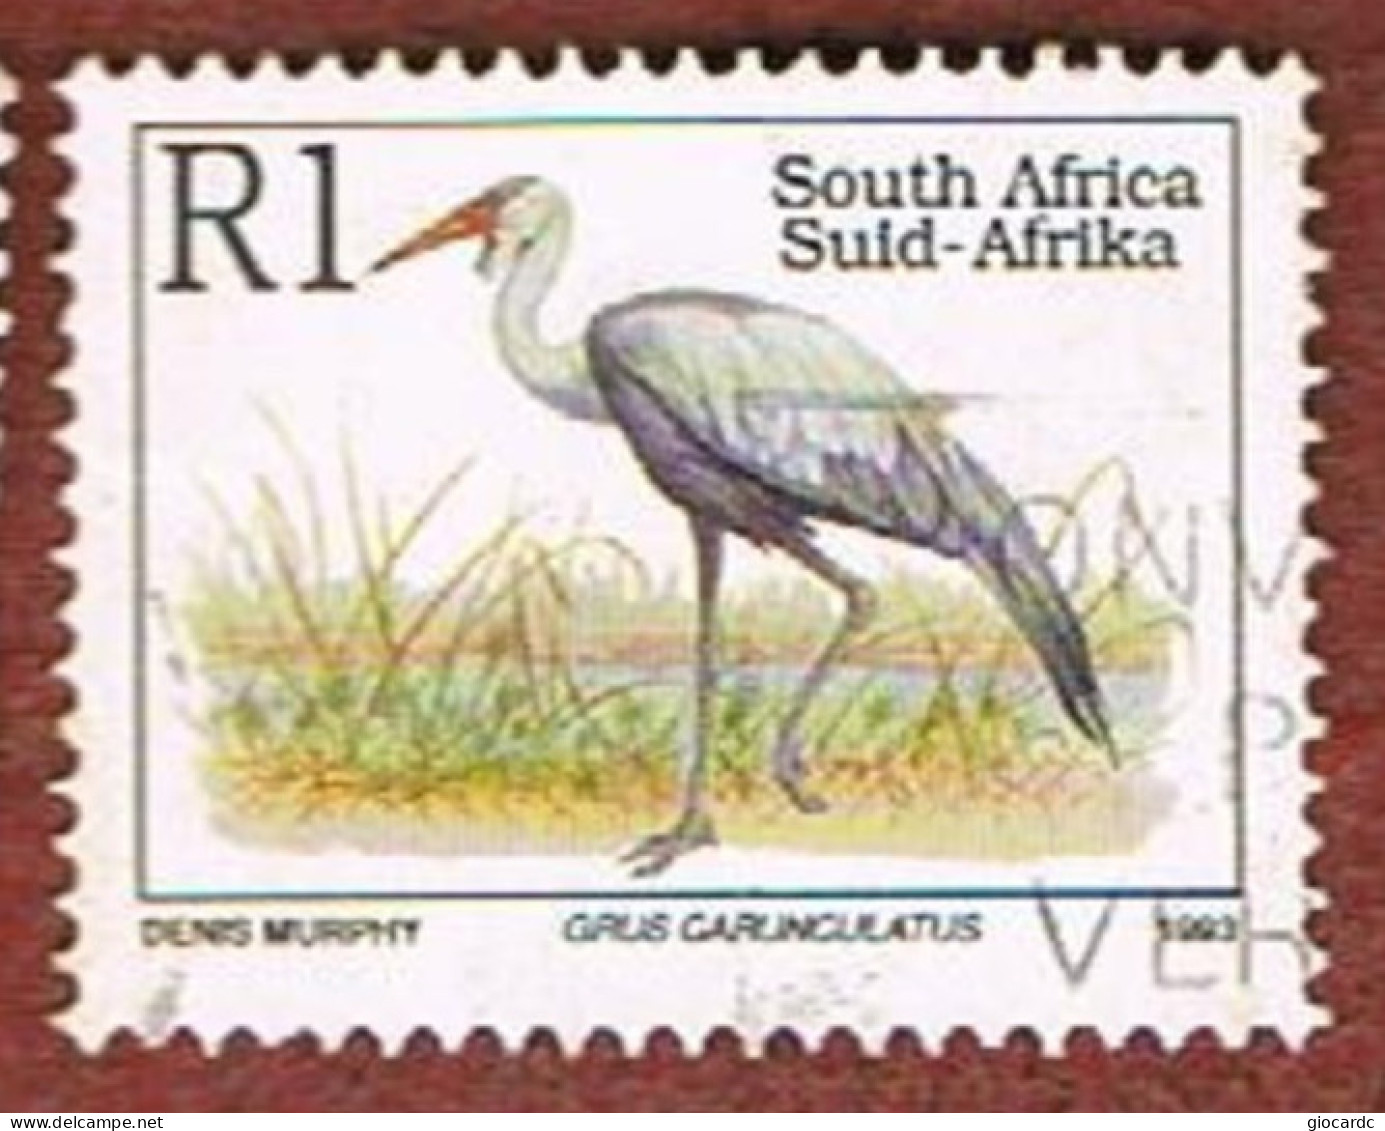 SUD AFRICA (SOUTH AFRICA) - SG 817c - 1993 ENDANGERED ANIMALS: WATTLED CRANE   - USED - Gebraucht